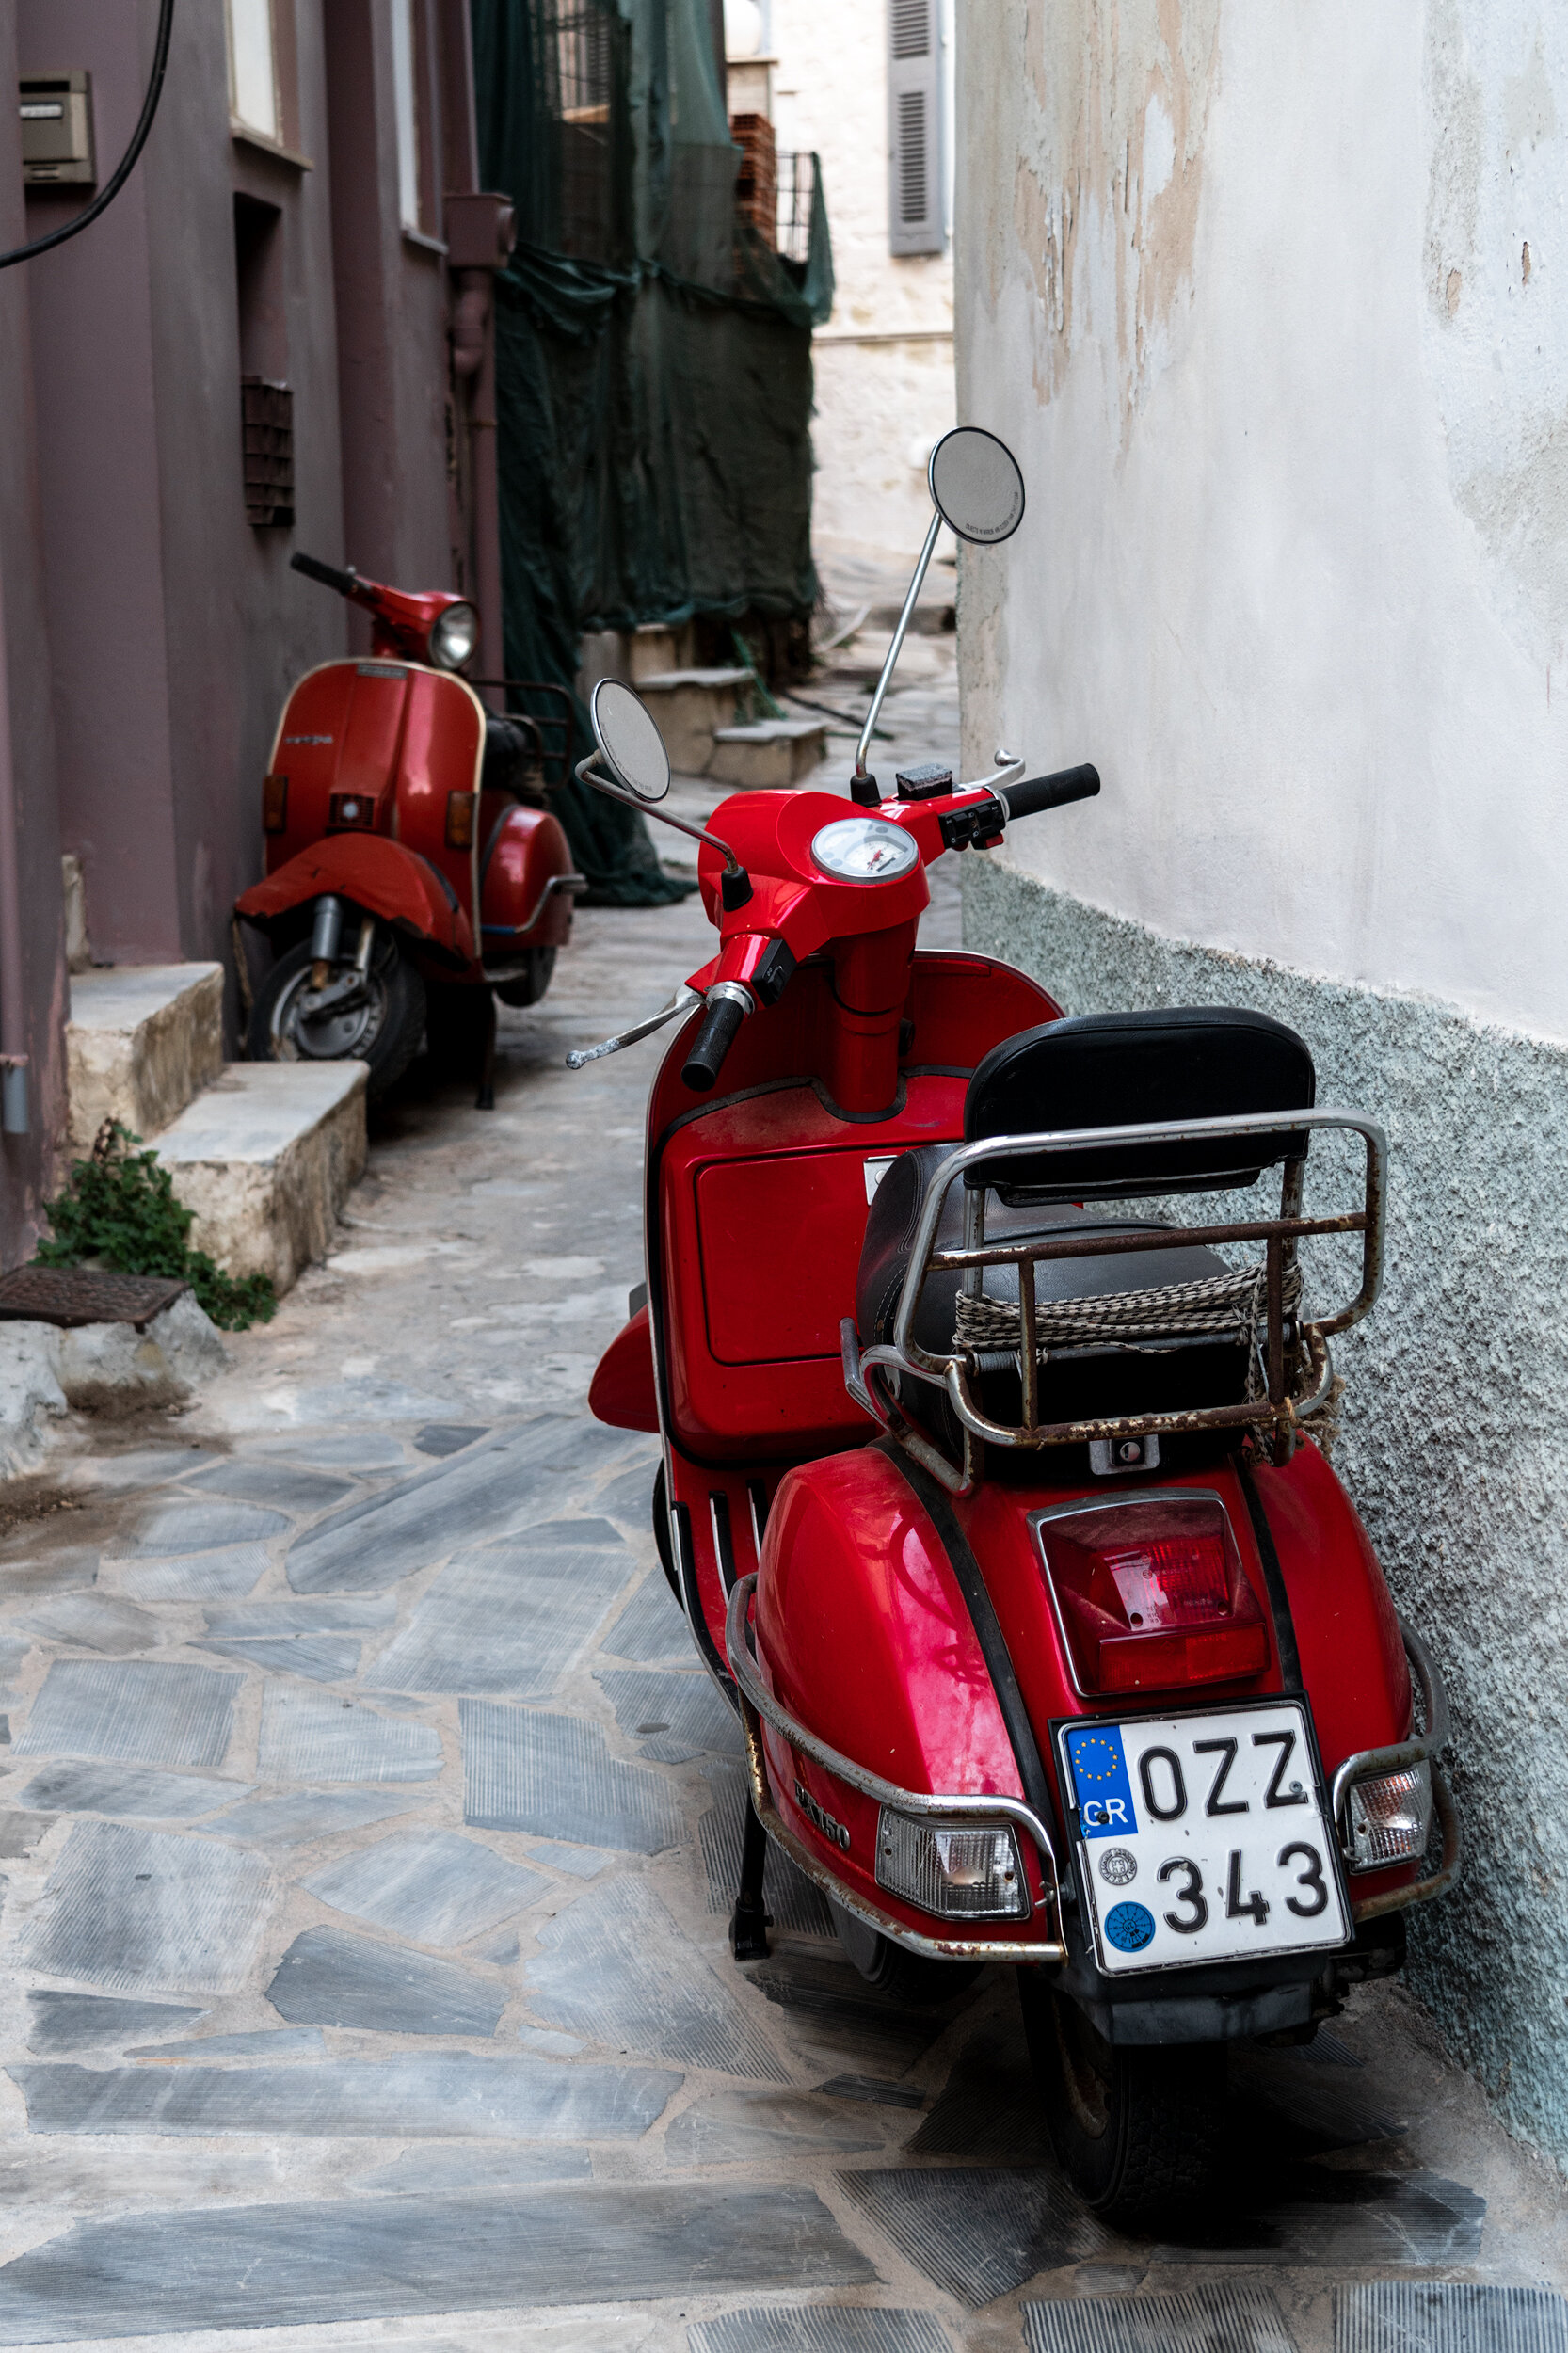 Streets-Of-Syros-Greece-Vasilis-Moustakas-Travel-Photography (1).jpg